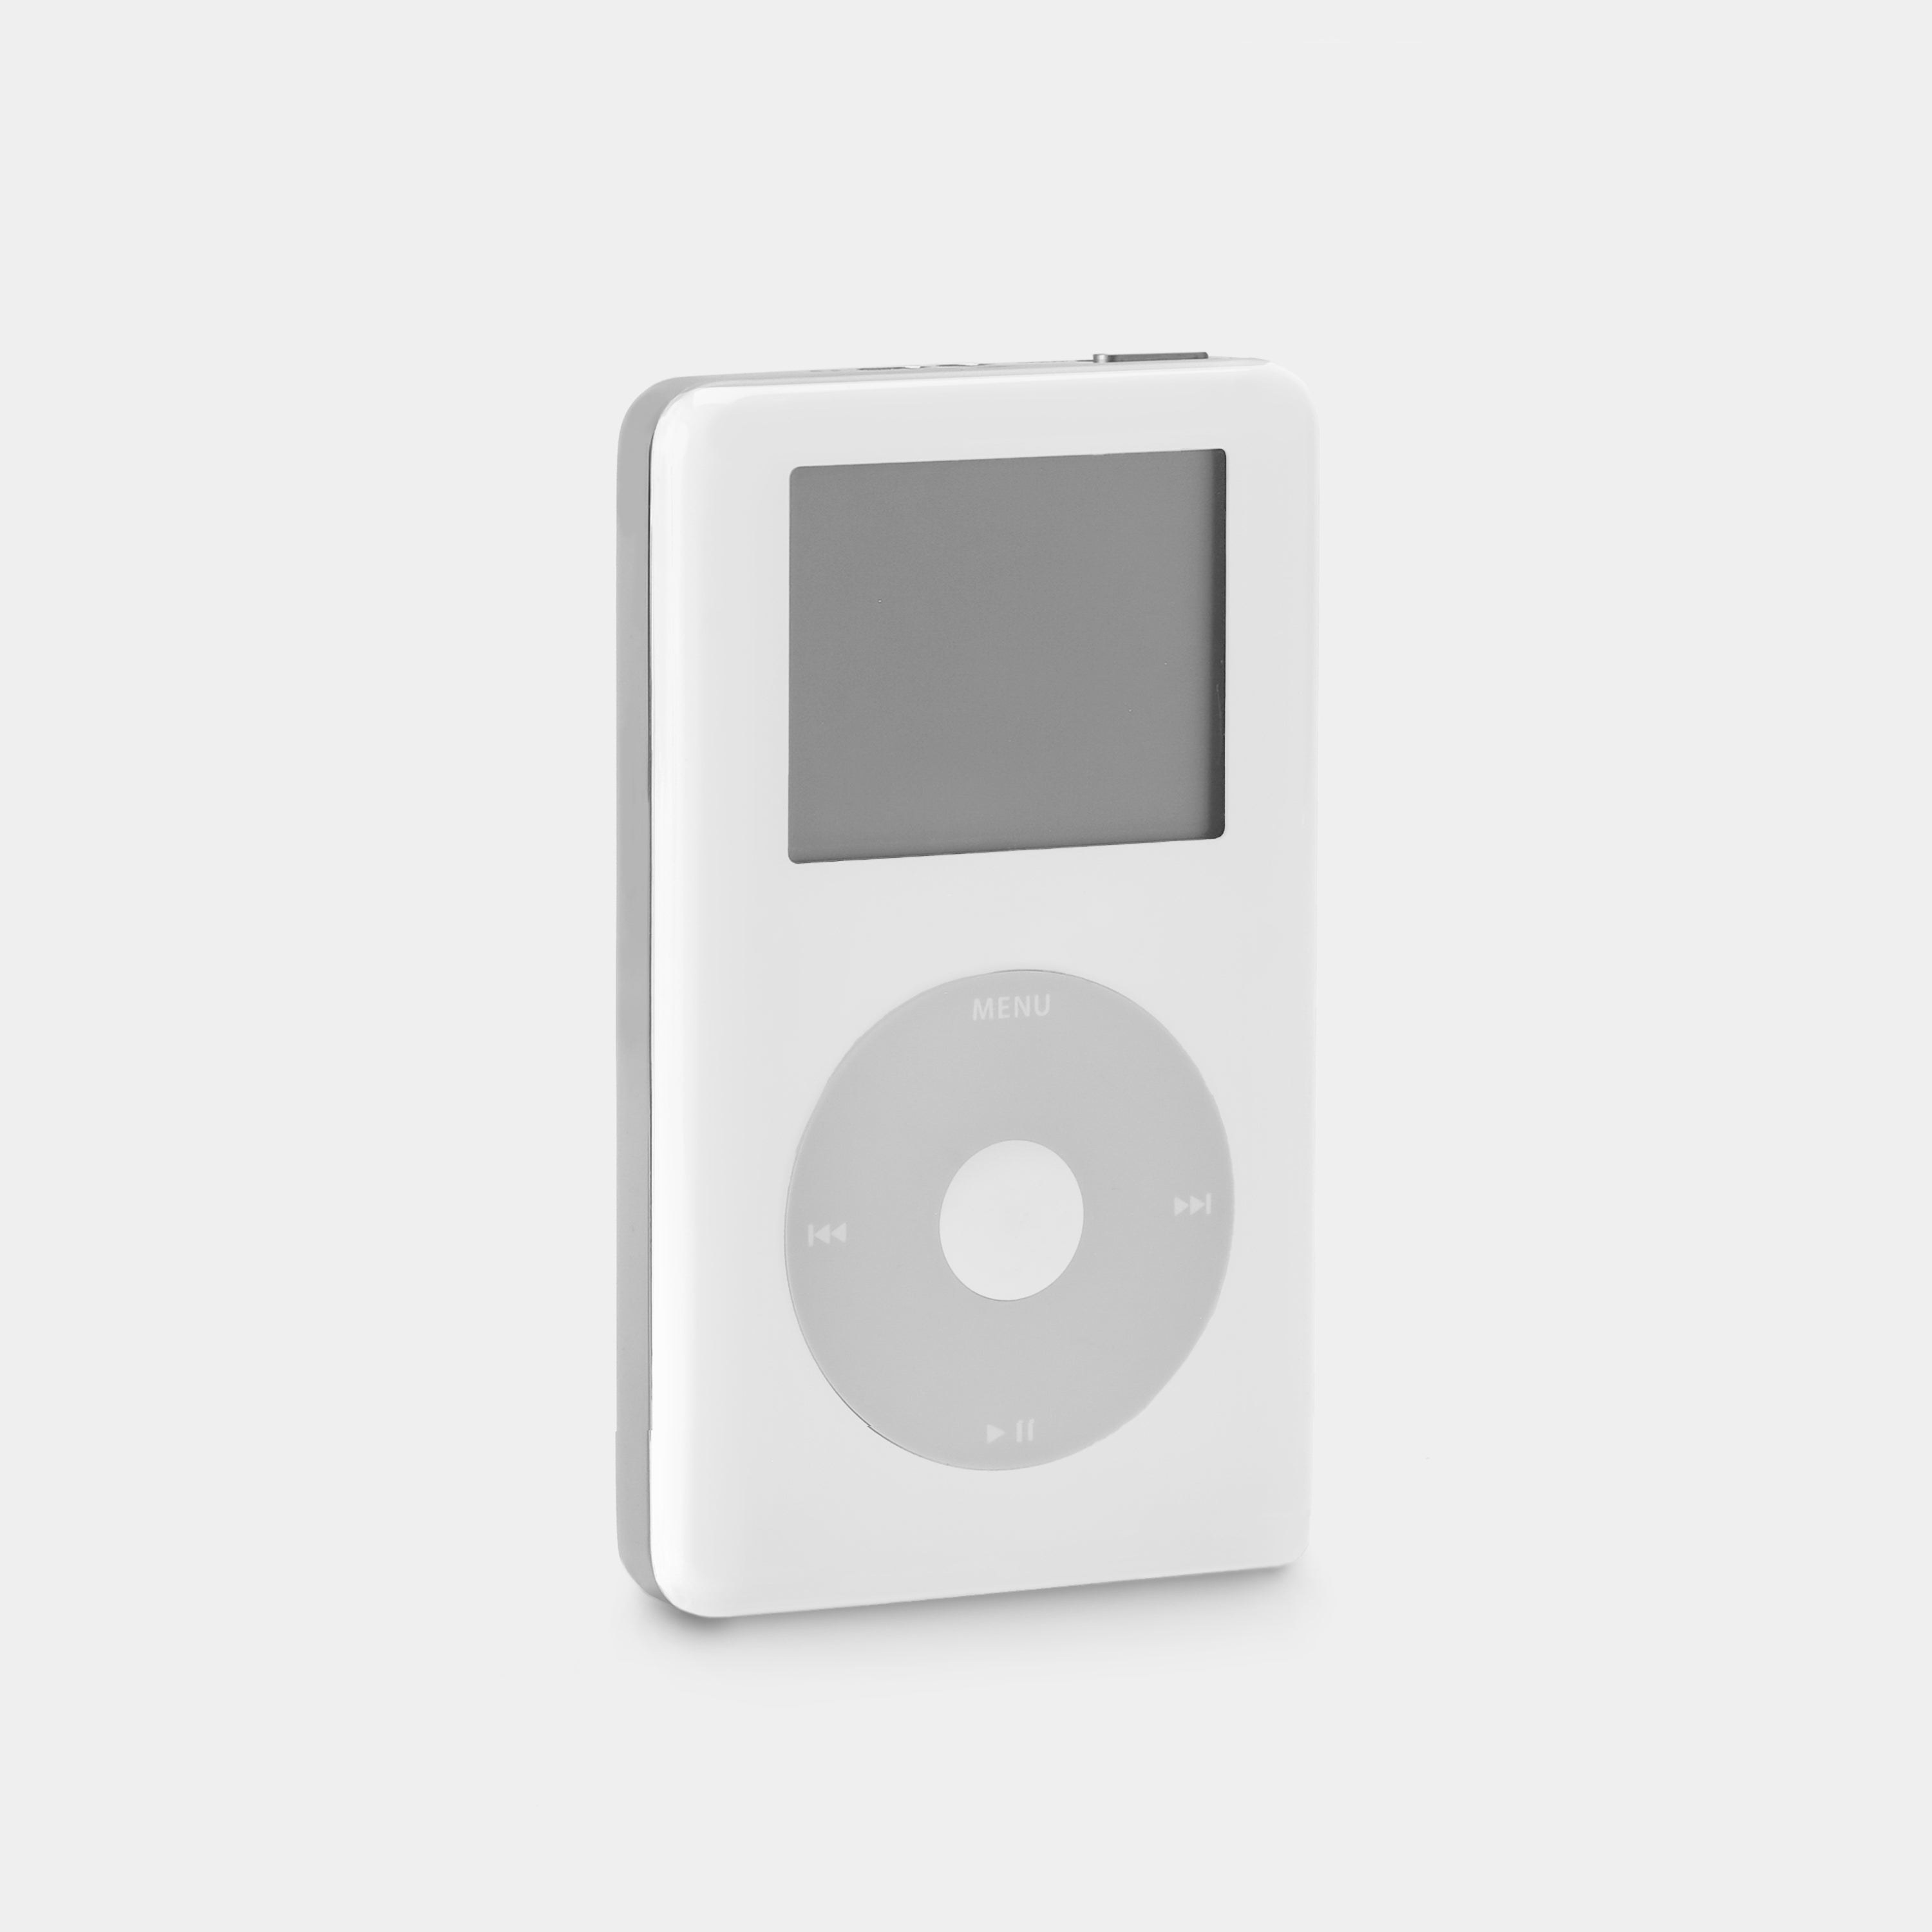 Apple iPod Nano 5th Generation Digital MP3 Player / Radio Orange